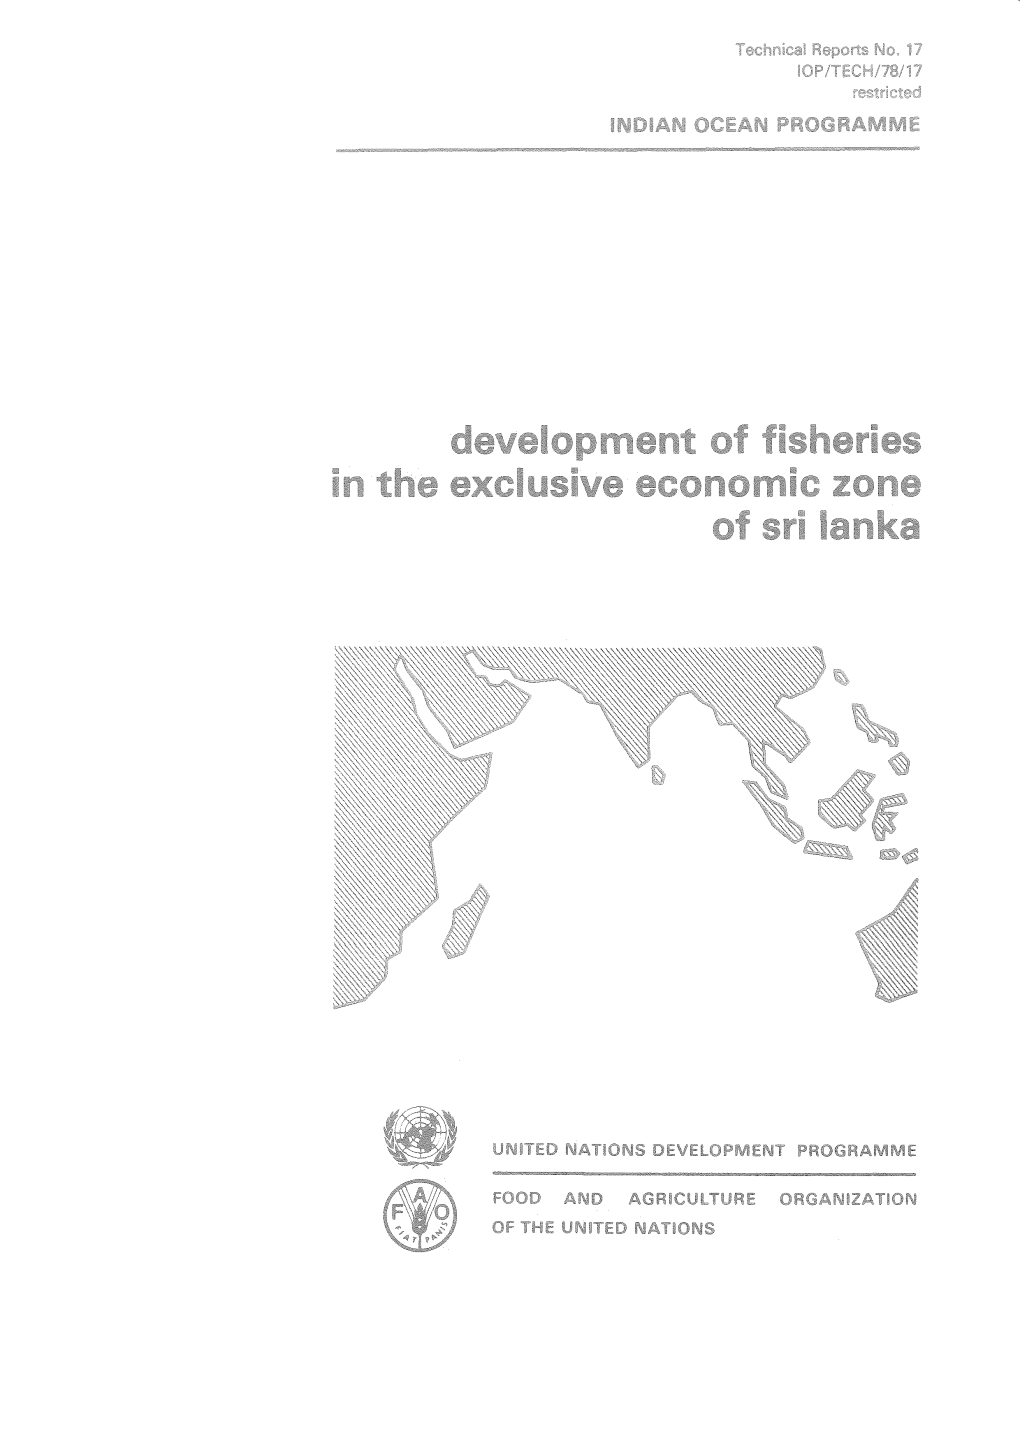 Development of Fisheries in the Exclusive Economic Zone of Sri Lanka